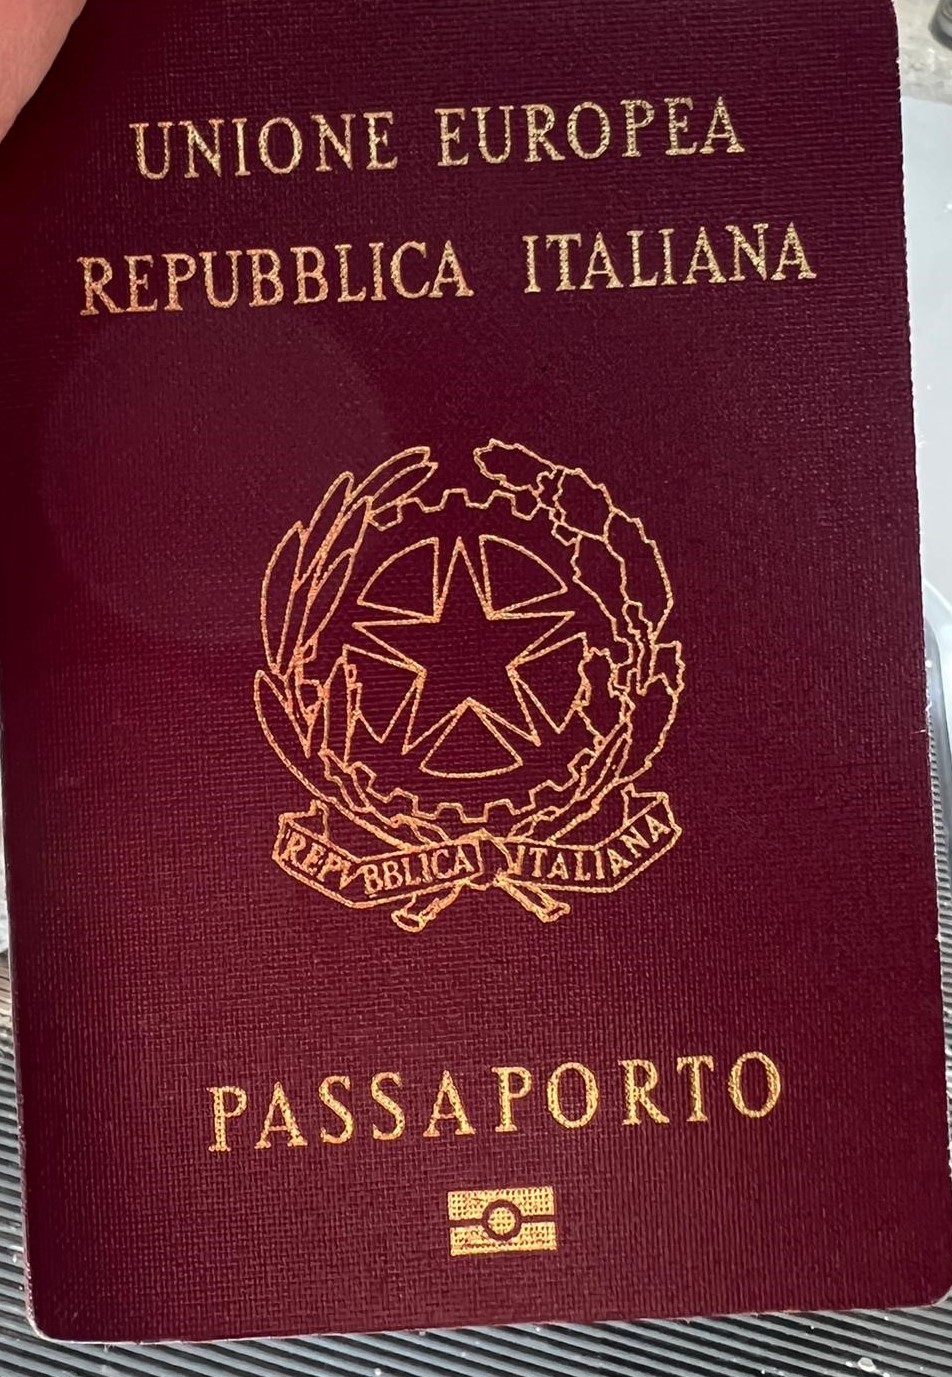 documento passaporto 2 .jpg